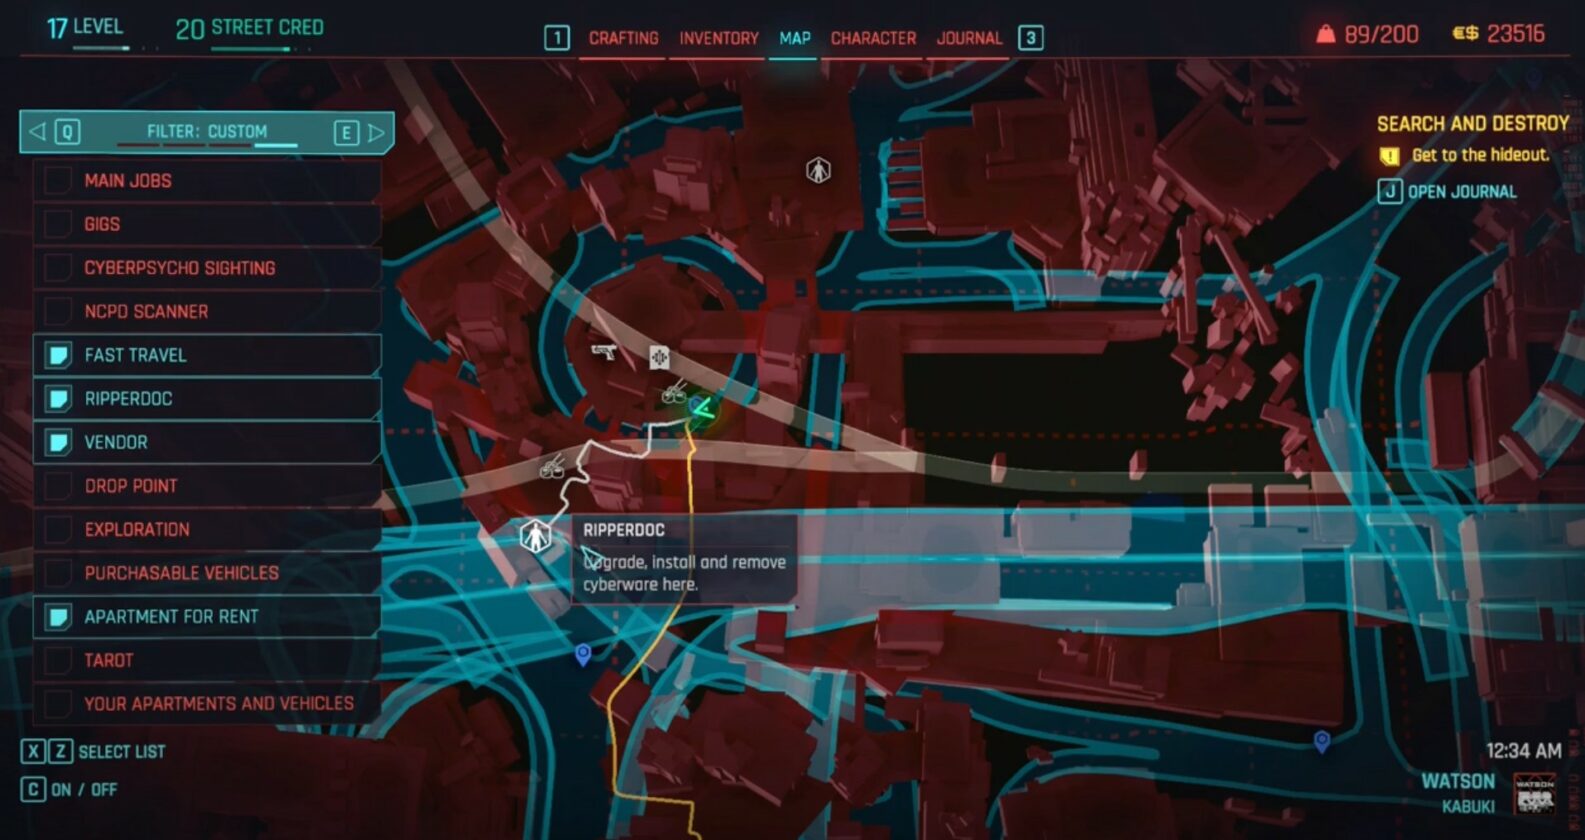 Gorilla Arm location in Cyberpunk 2077